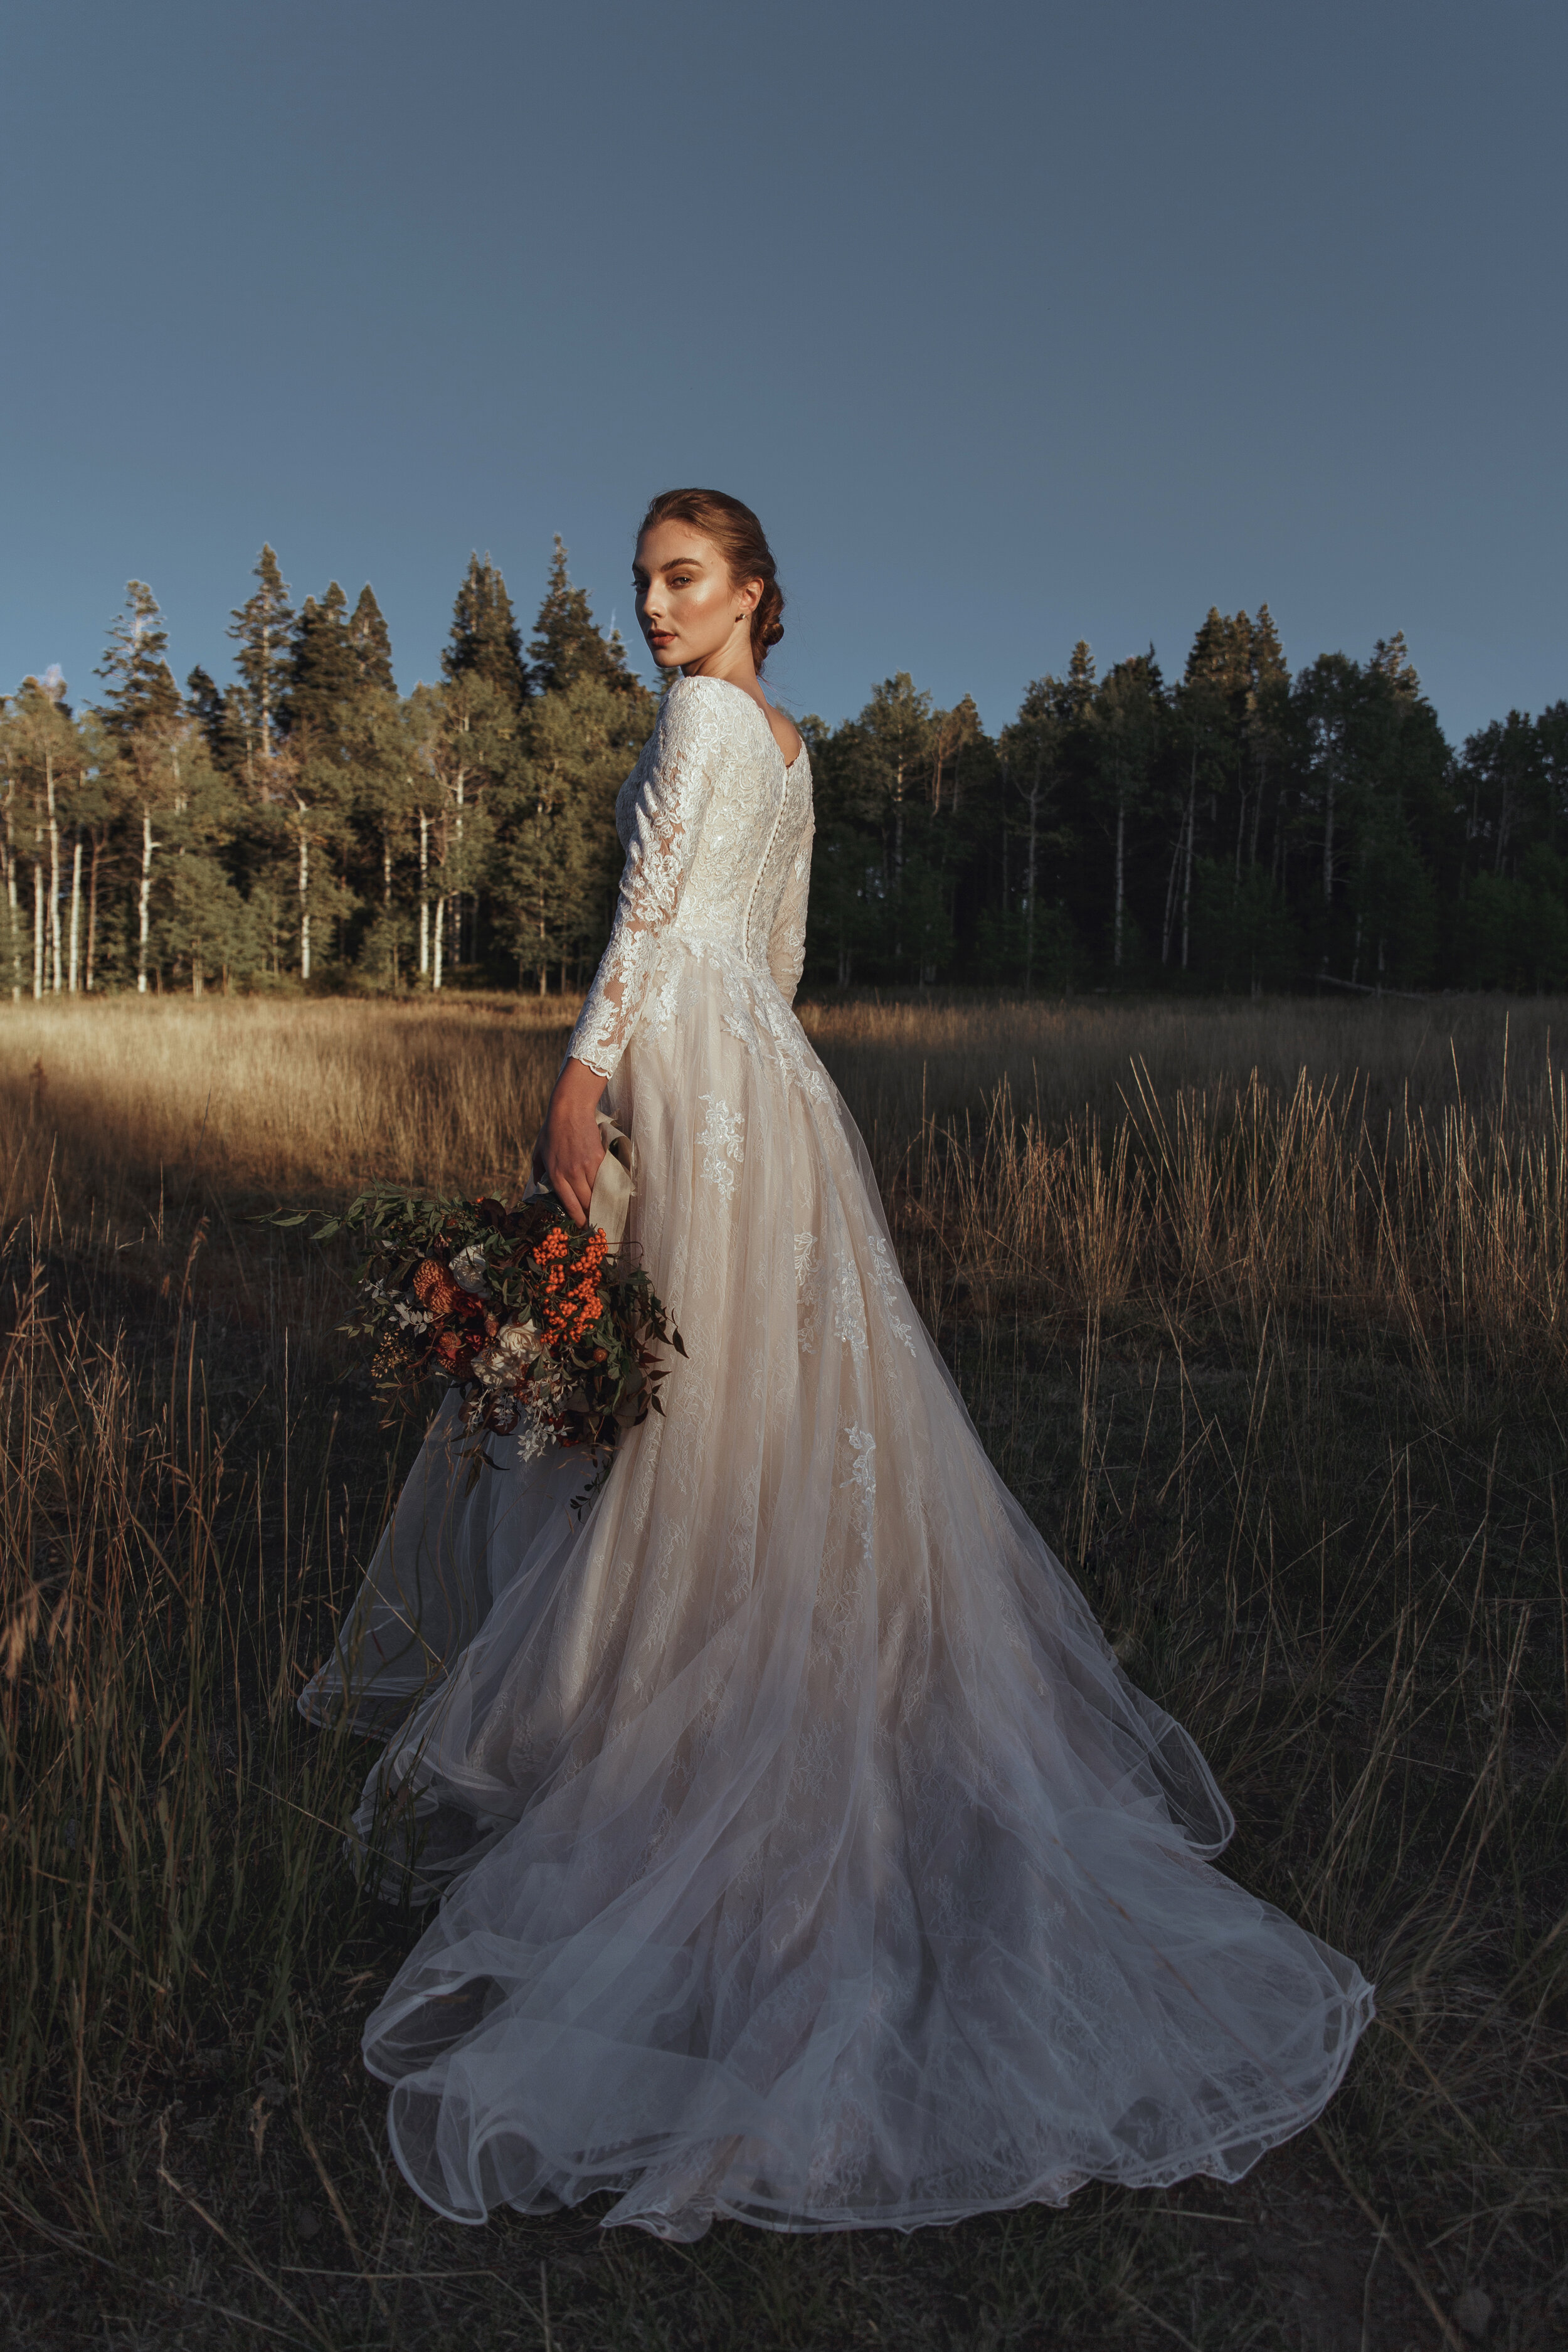 Autumn Bridal Editorial | Southern California Wedding Photographer - Natalie Michelle Photo Co.